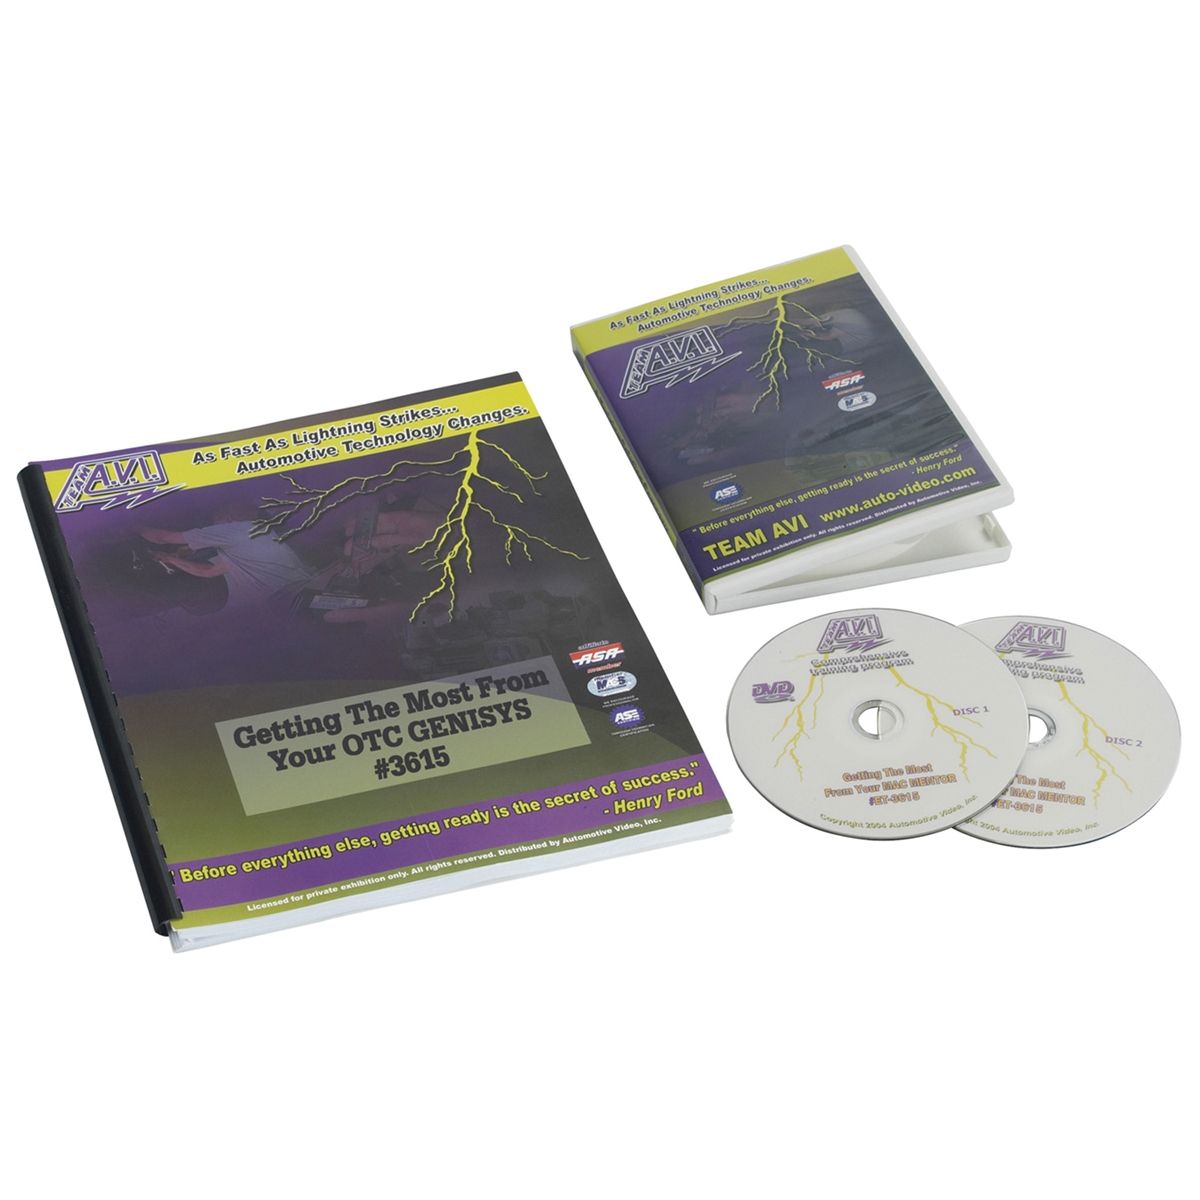 Genisys Training DVD - Spanish Language